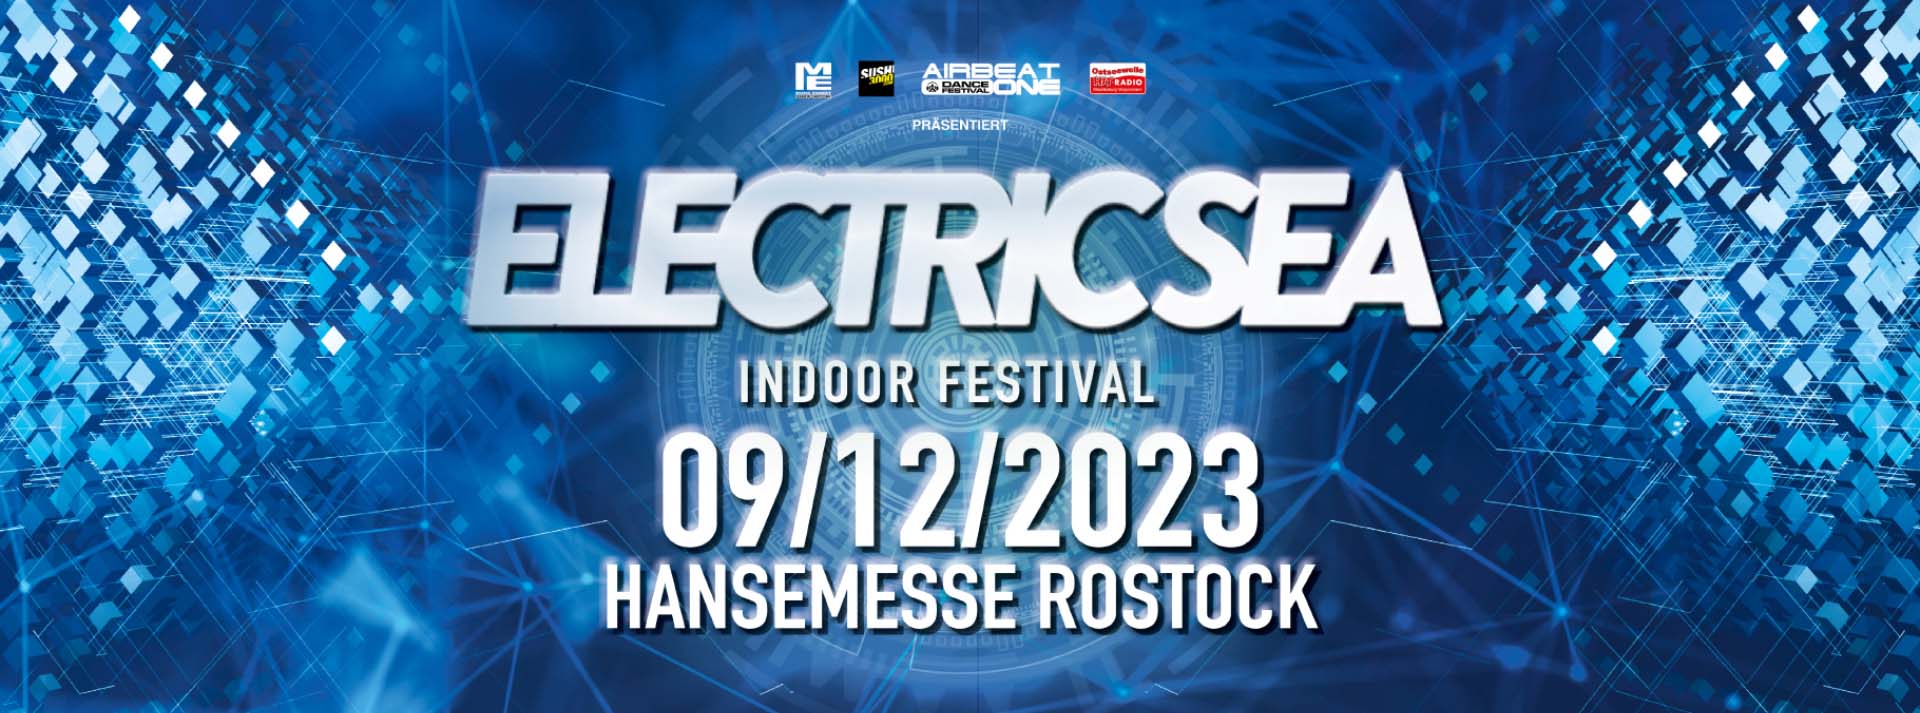 Electric Sea Festival – HanseMesse Rostock